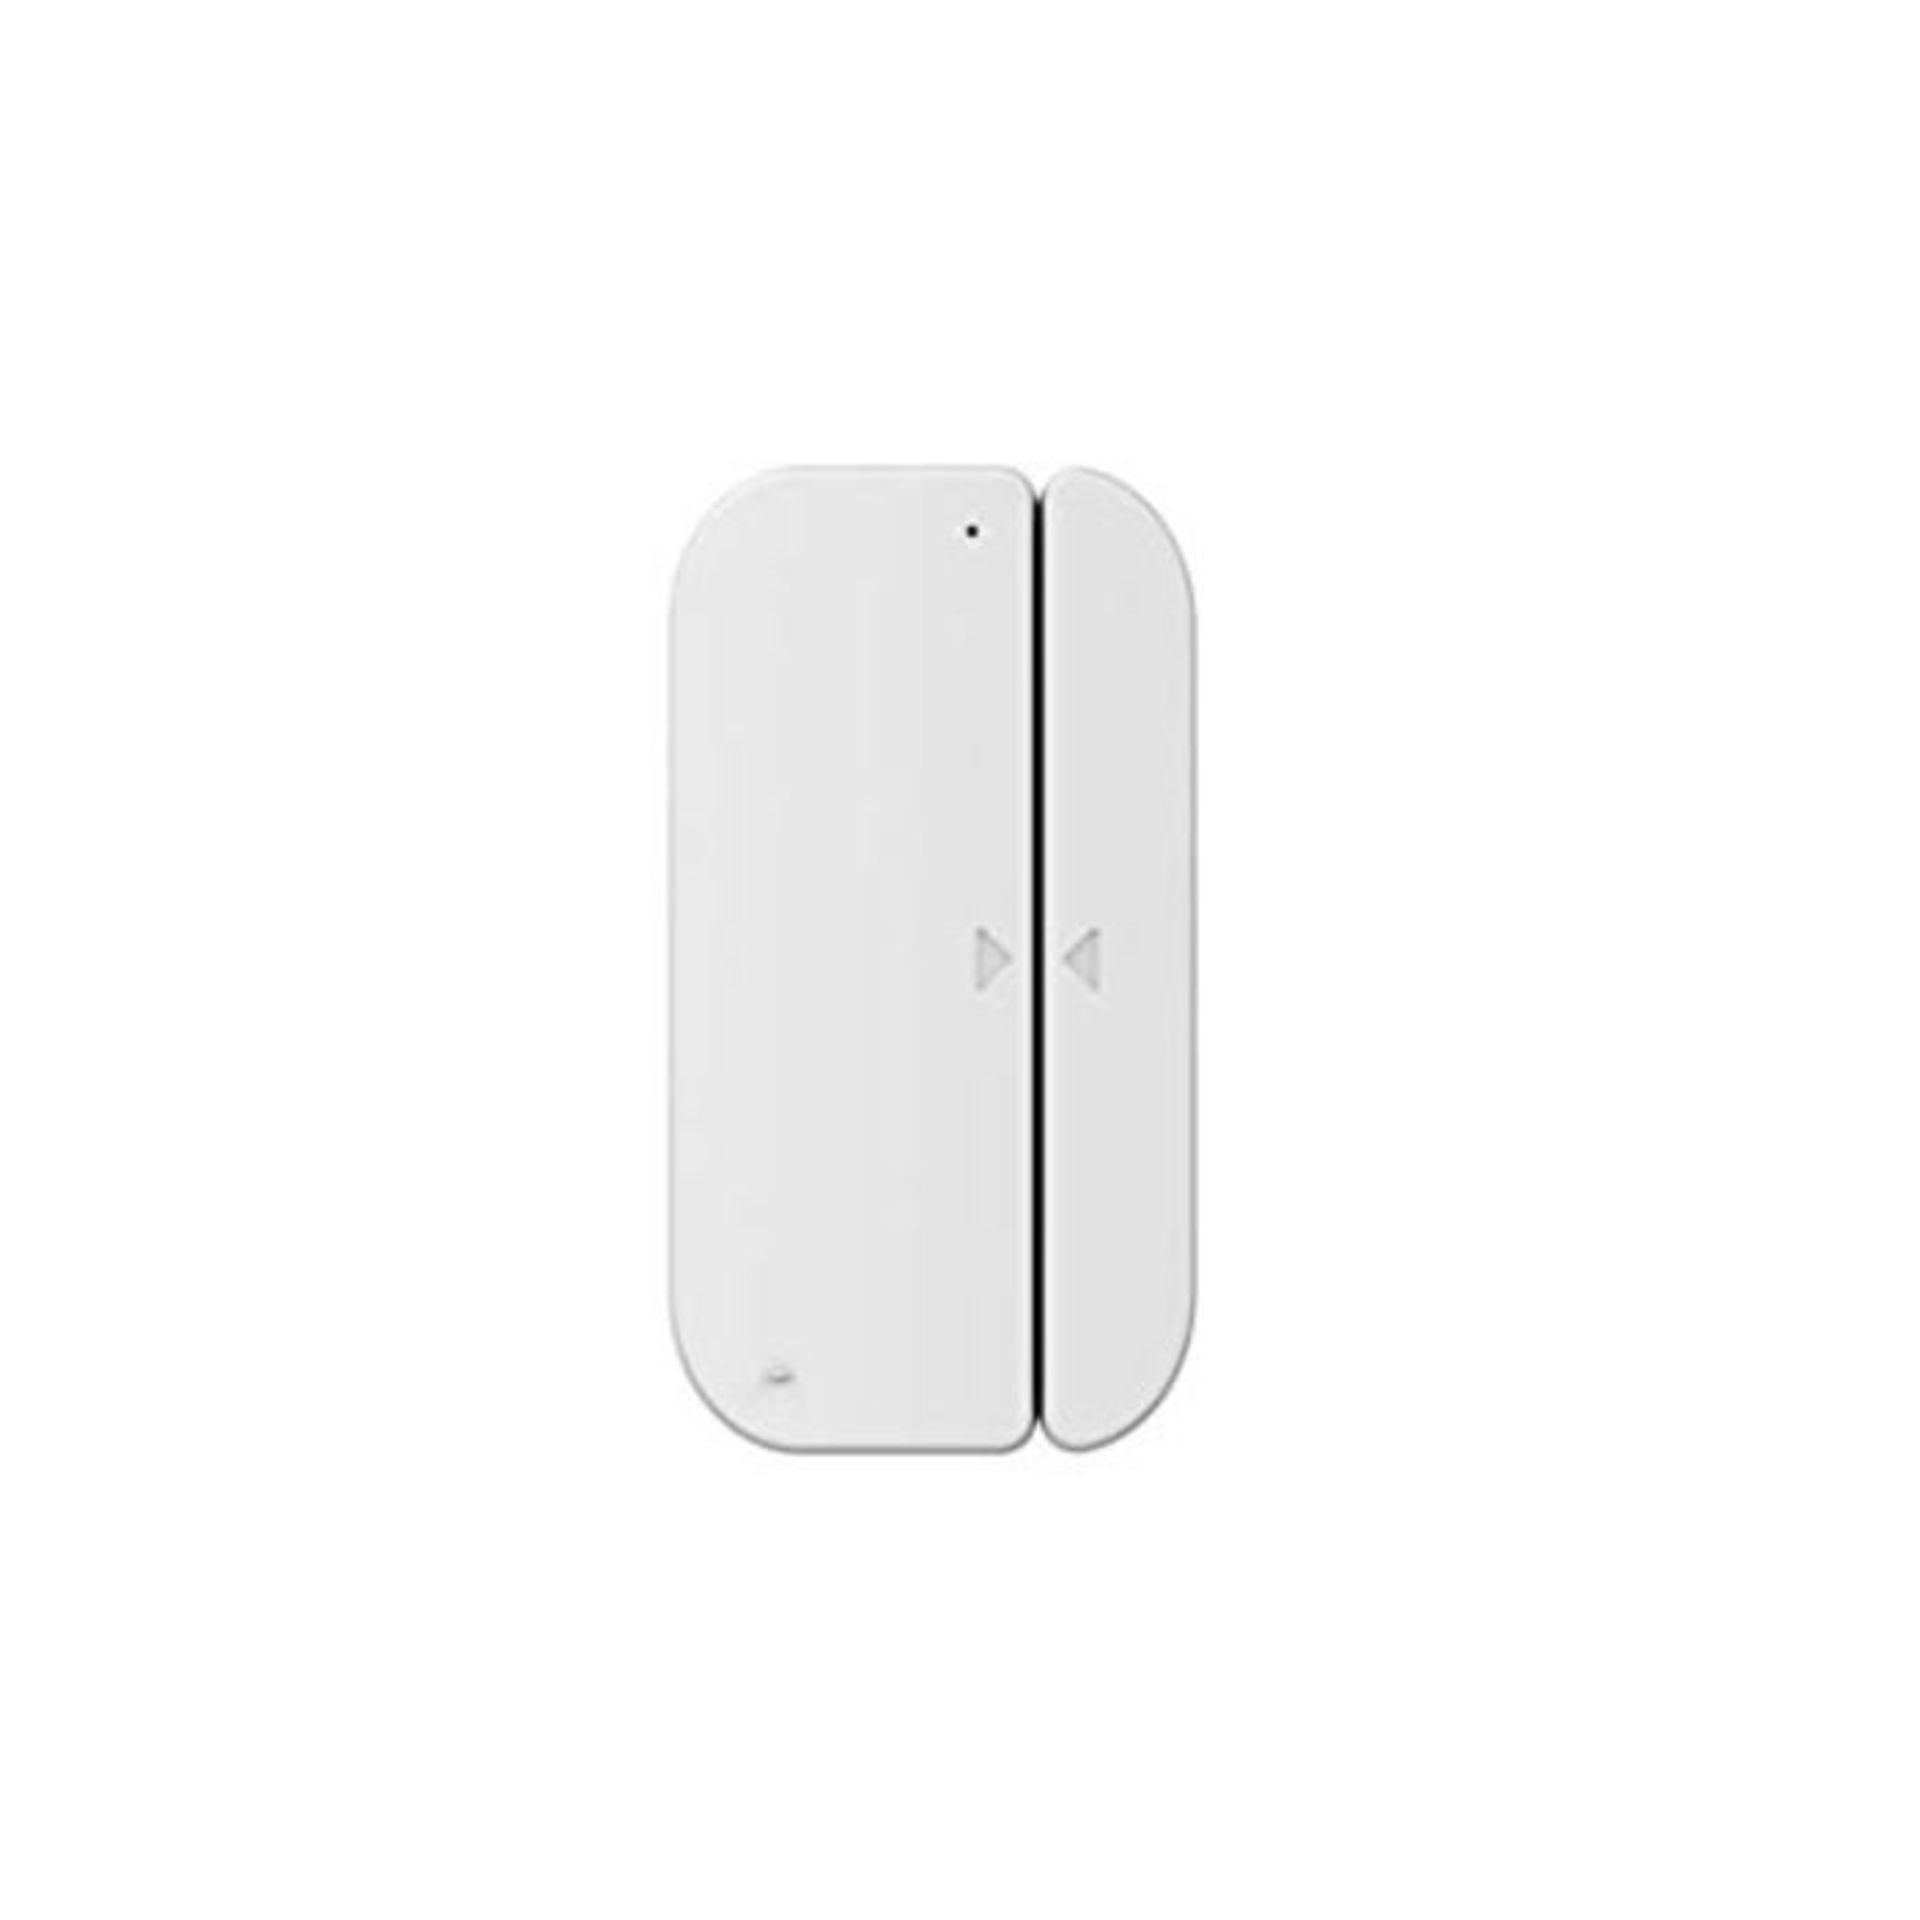 Hama 00176553 Smart Home WiFi Door/Window Contact-White-Plastic, 1.5 V